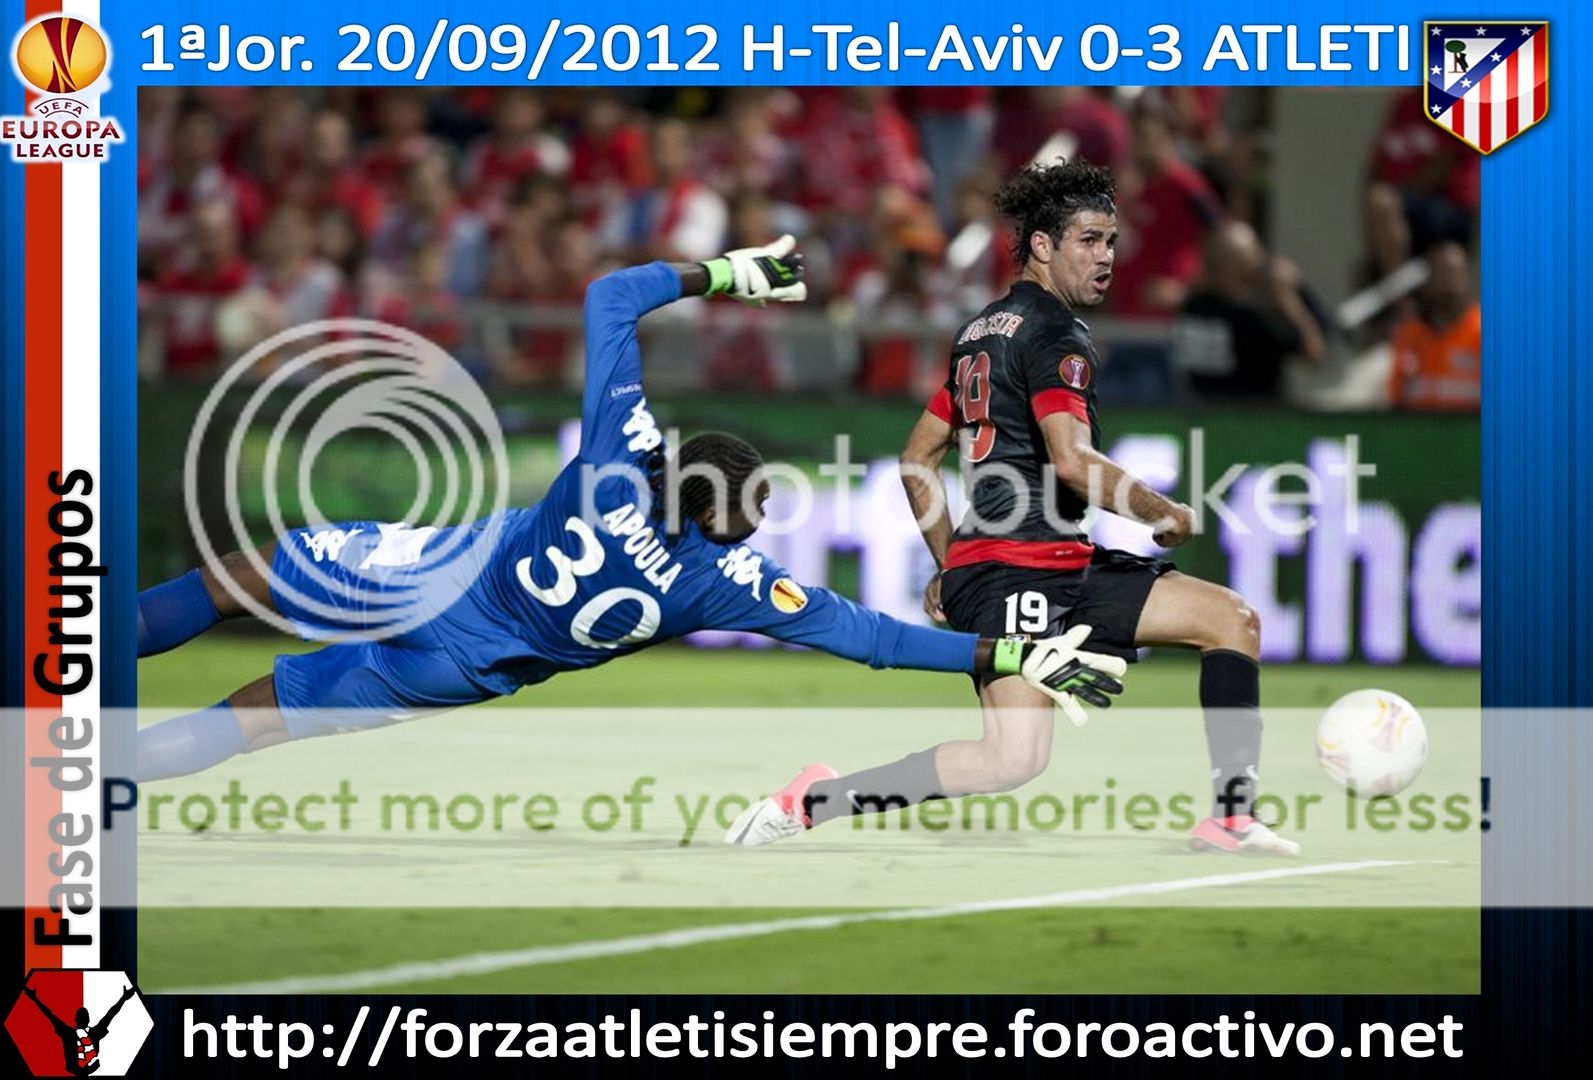 1ª Jor. UEFA Euro. L. 2012/13 - H. Tel Aviv 0-3 ATLETI - La cara B del ... 024Copiar_zps8dcc25b9